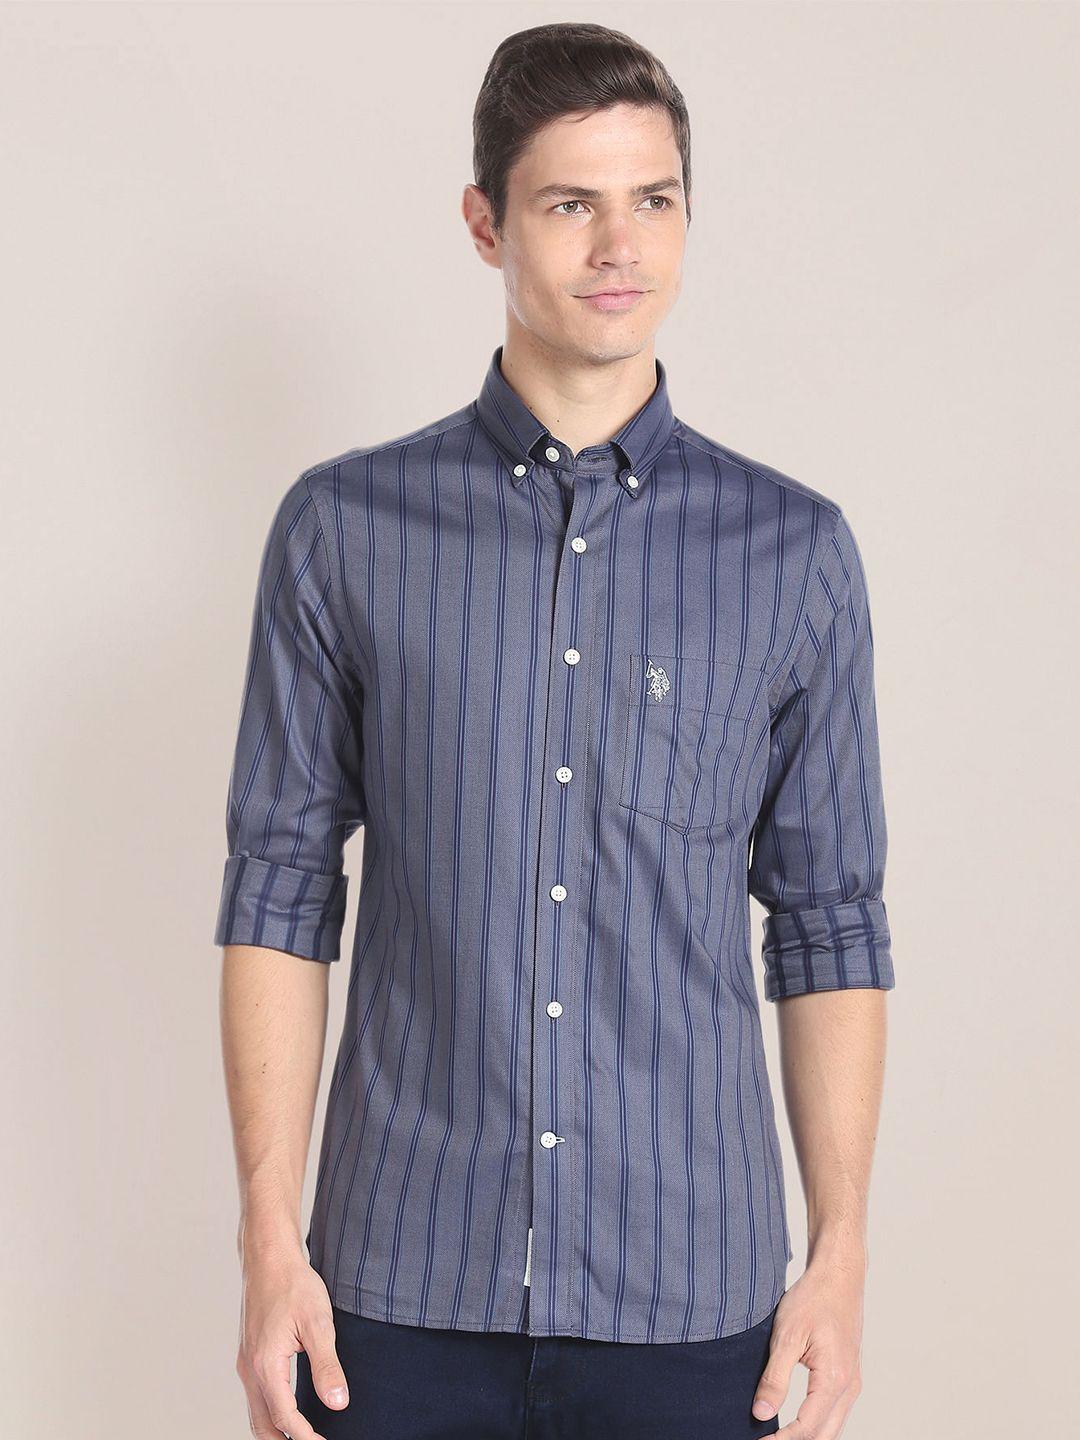 u.s. polo assn. vertical striped opaque casual shirt